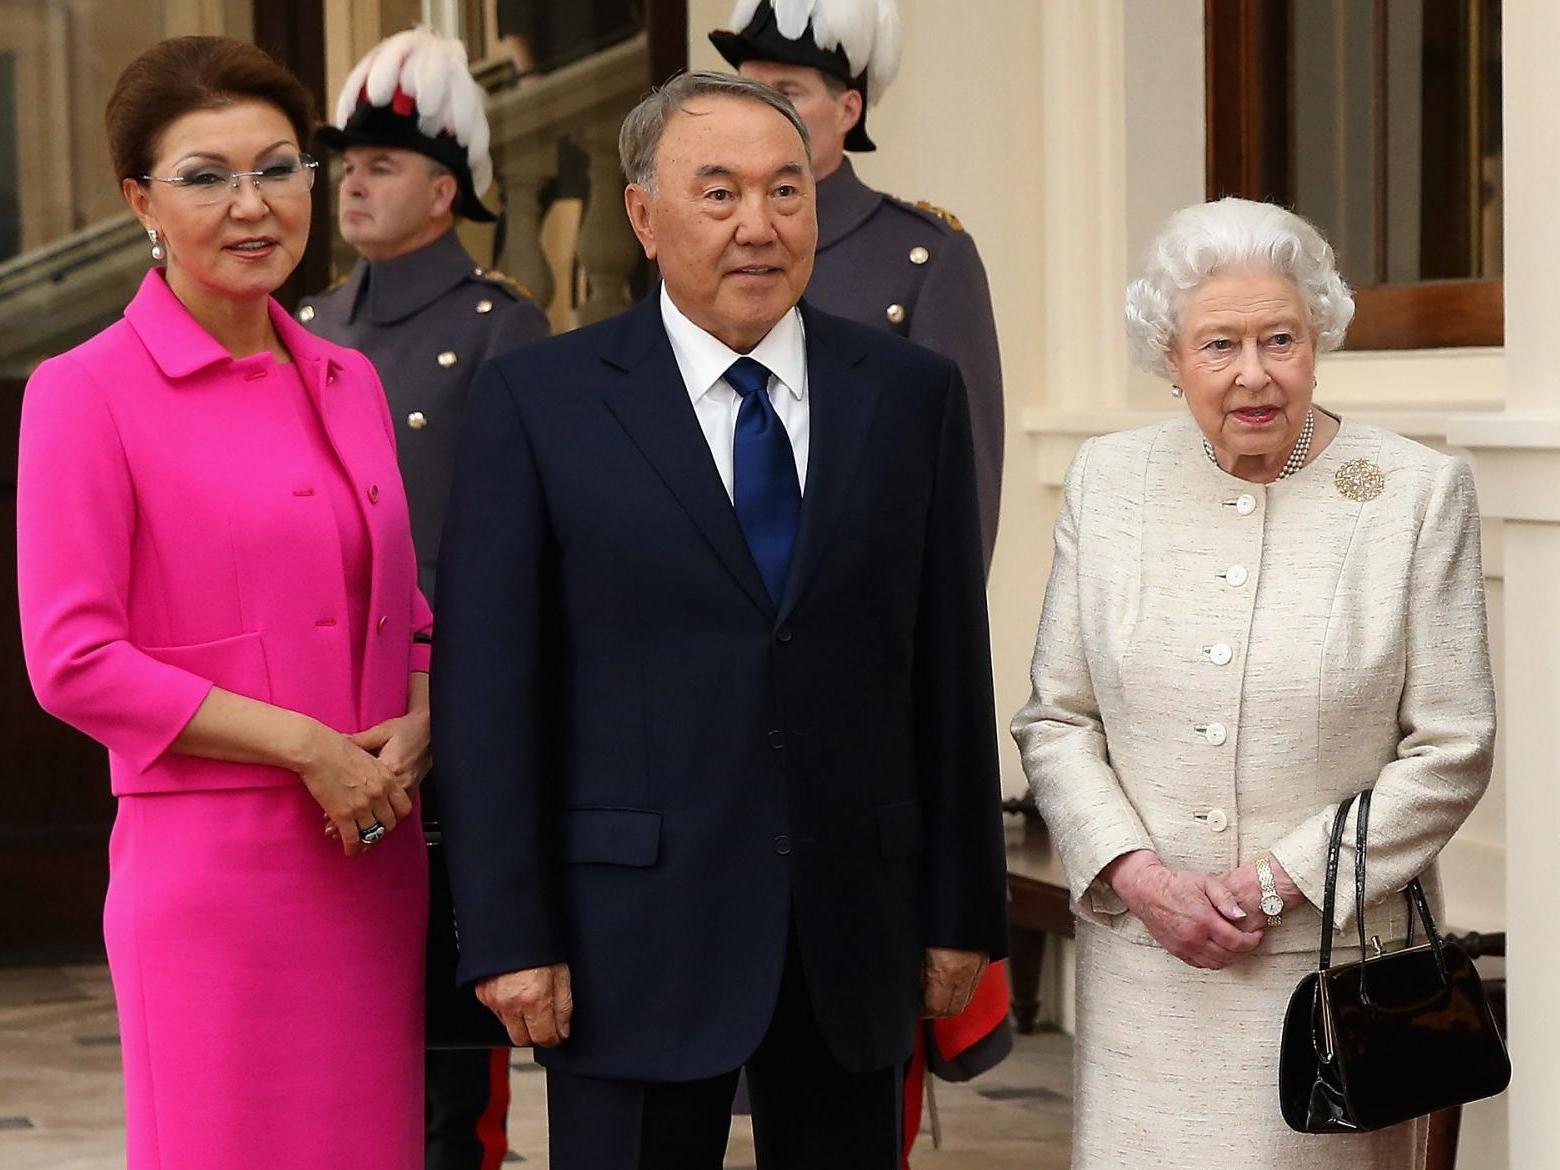 Dariga Nazarbayeva and her father president Nursultan Nazarbayev with Queen Elizabeth at Buckingham Palace in November 2015